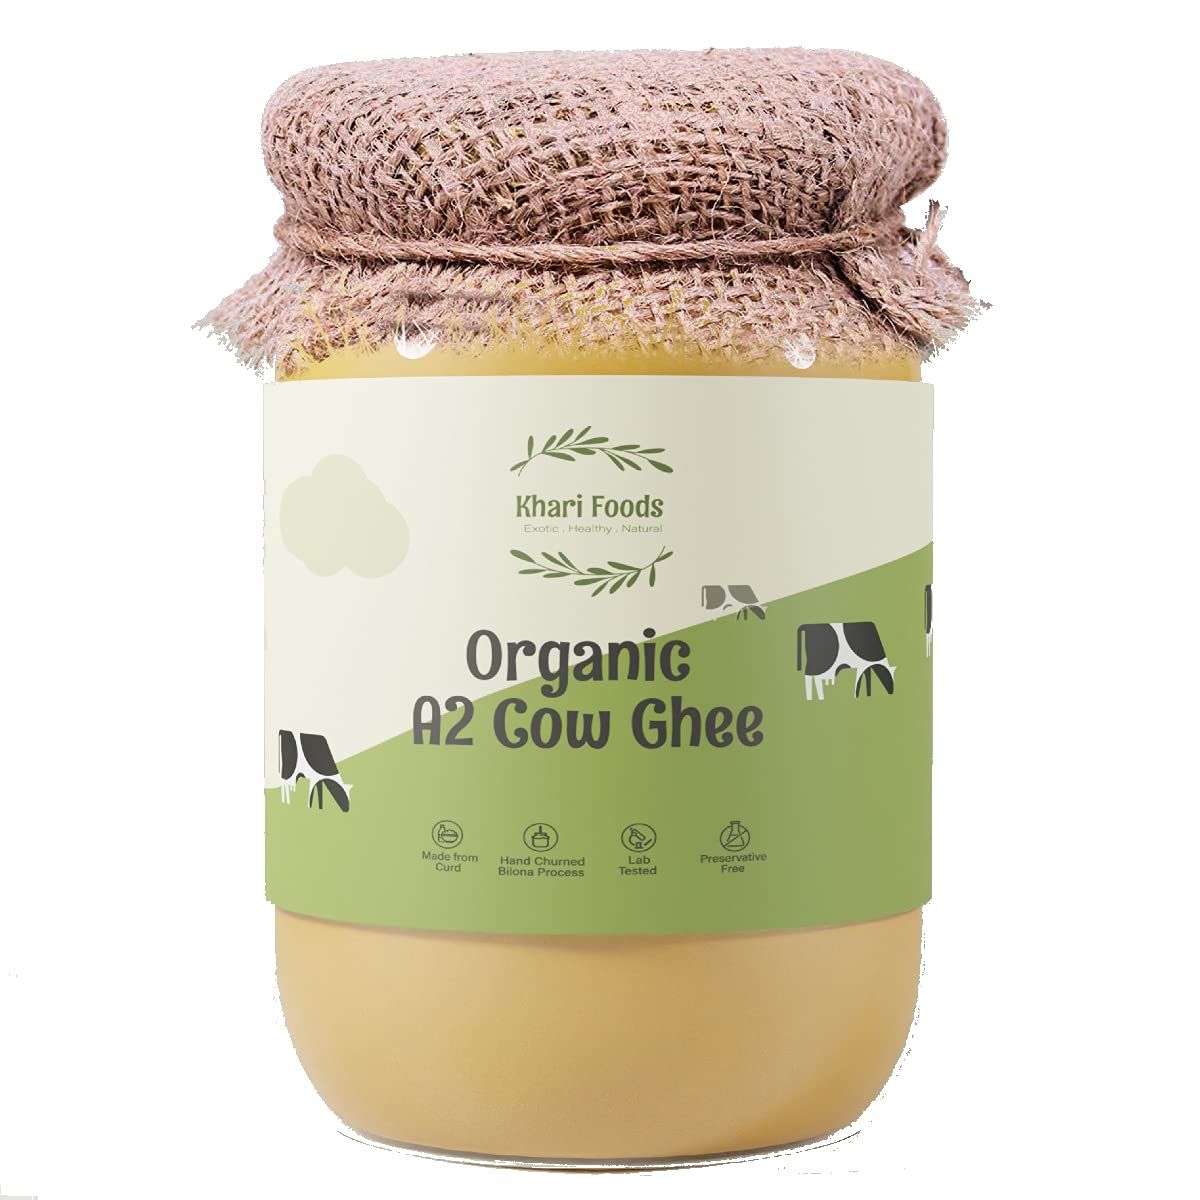 Khari Foods Organic A2 Cow Ghee Image